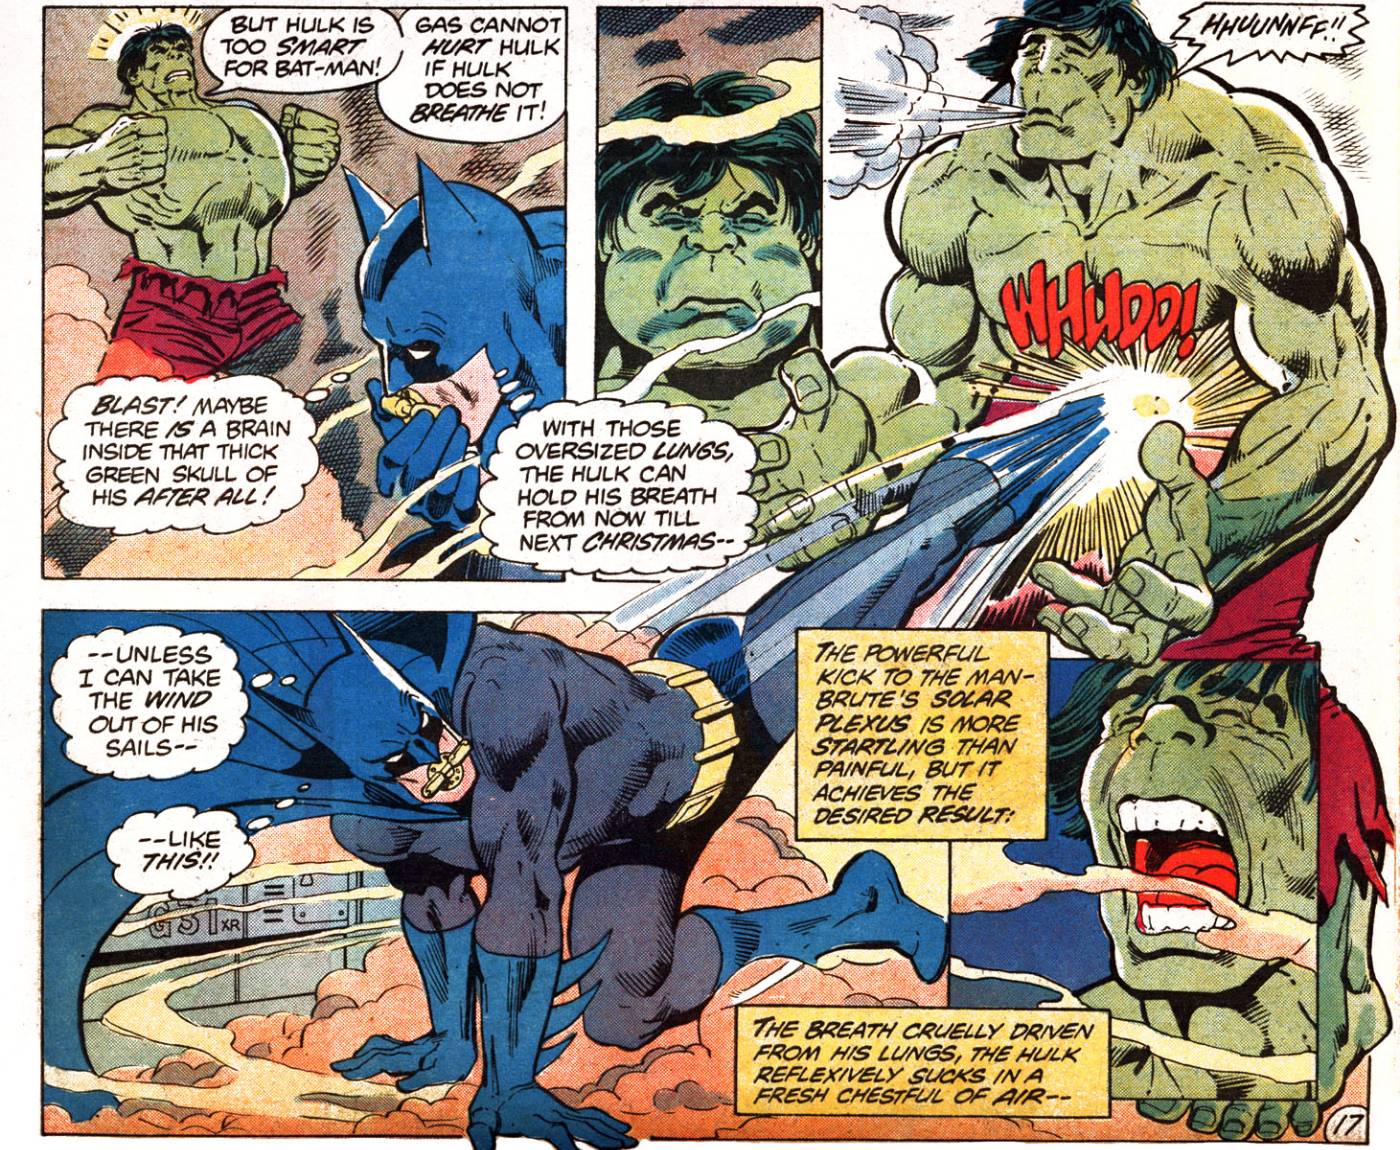 Batman versus the hulk